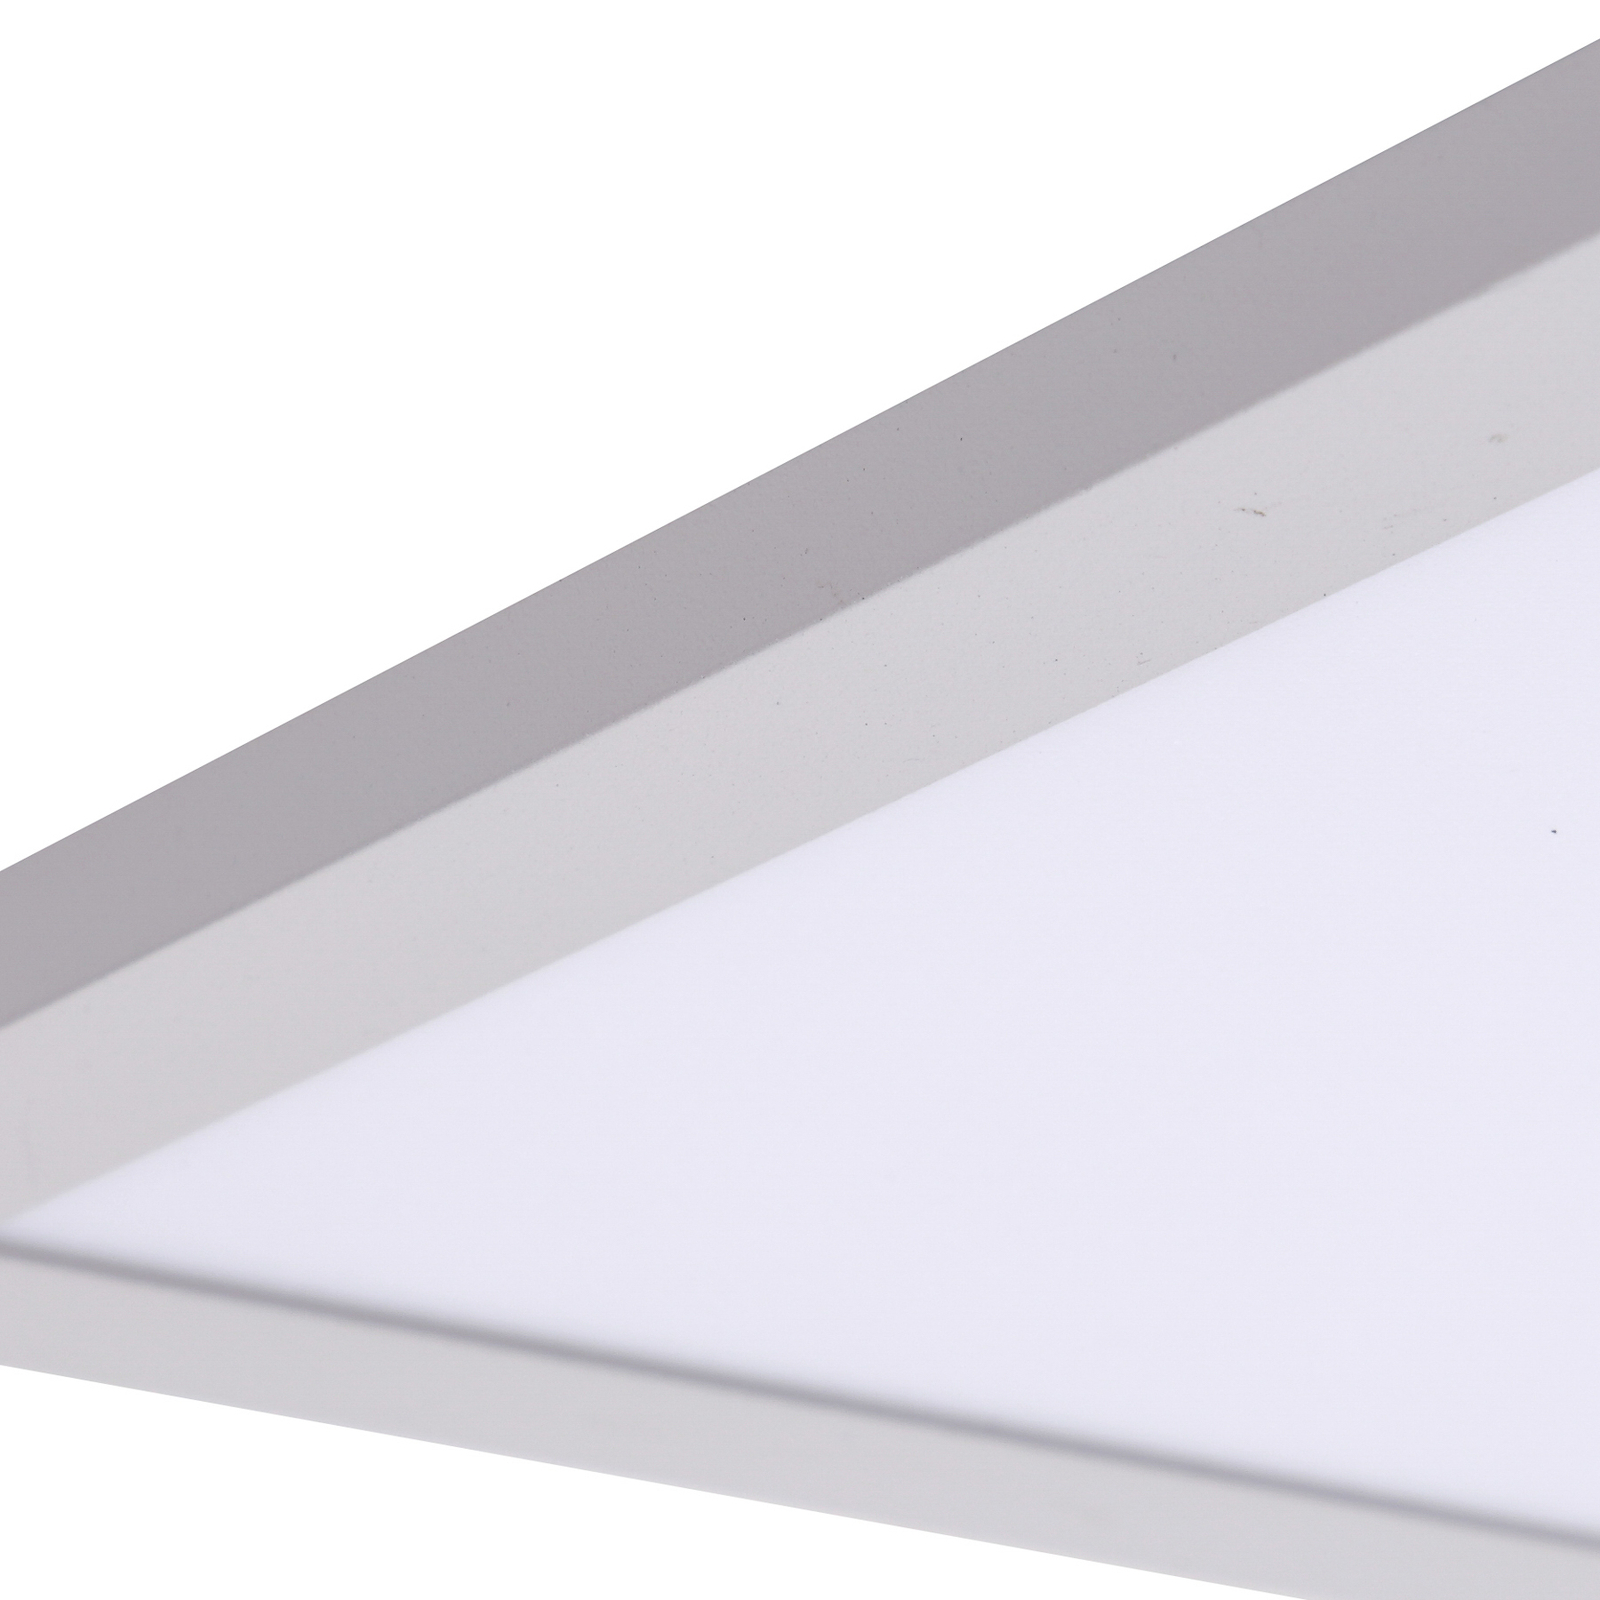 Lindby LED paneel Enhife, wit, 29,5 x 29,5 cm, aluminium